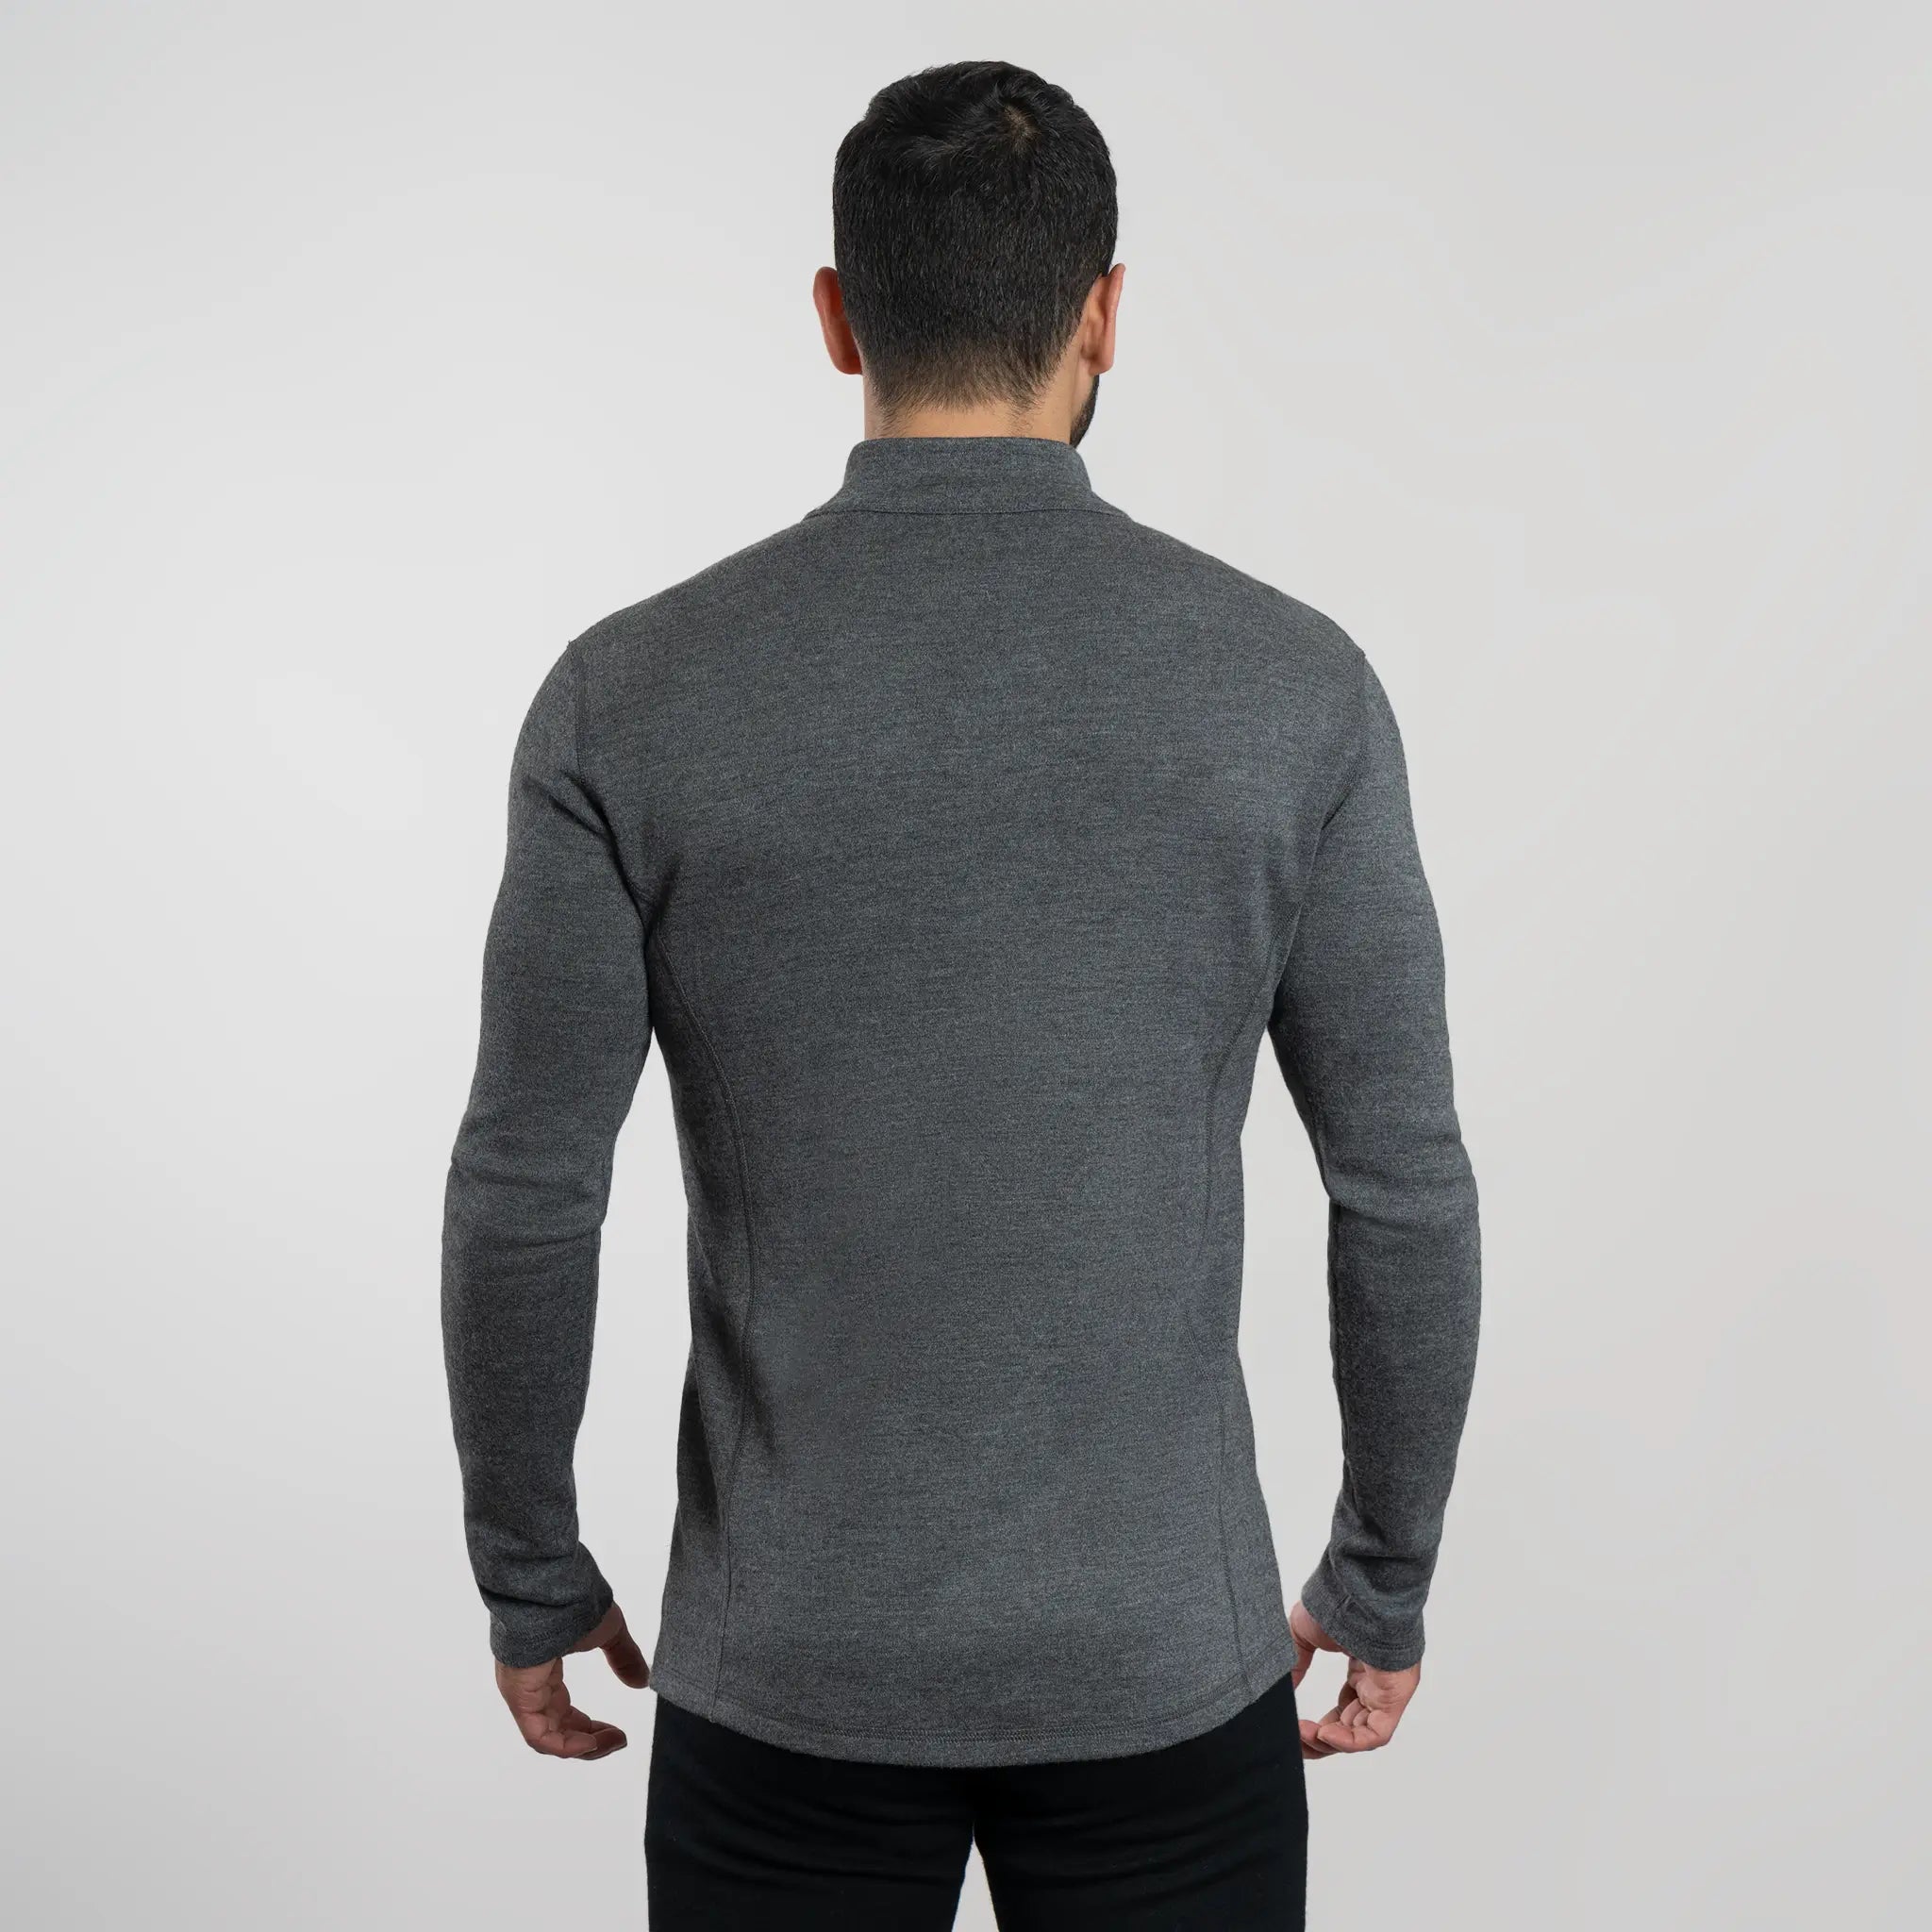 mens versatile design jacket full zip color gray